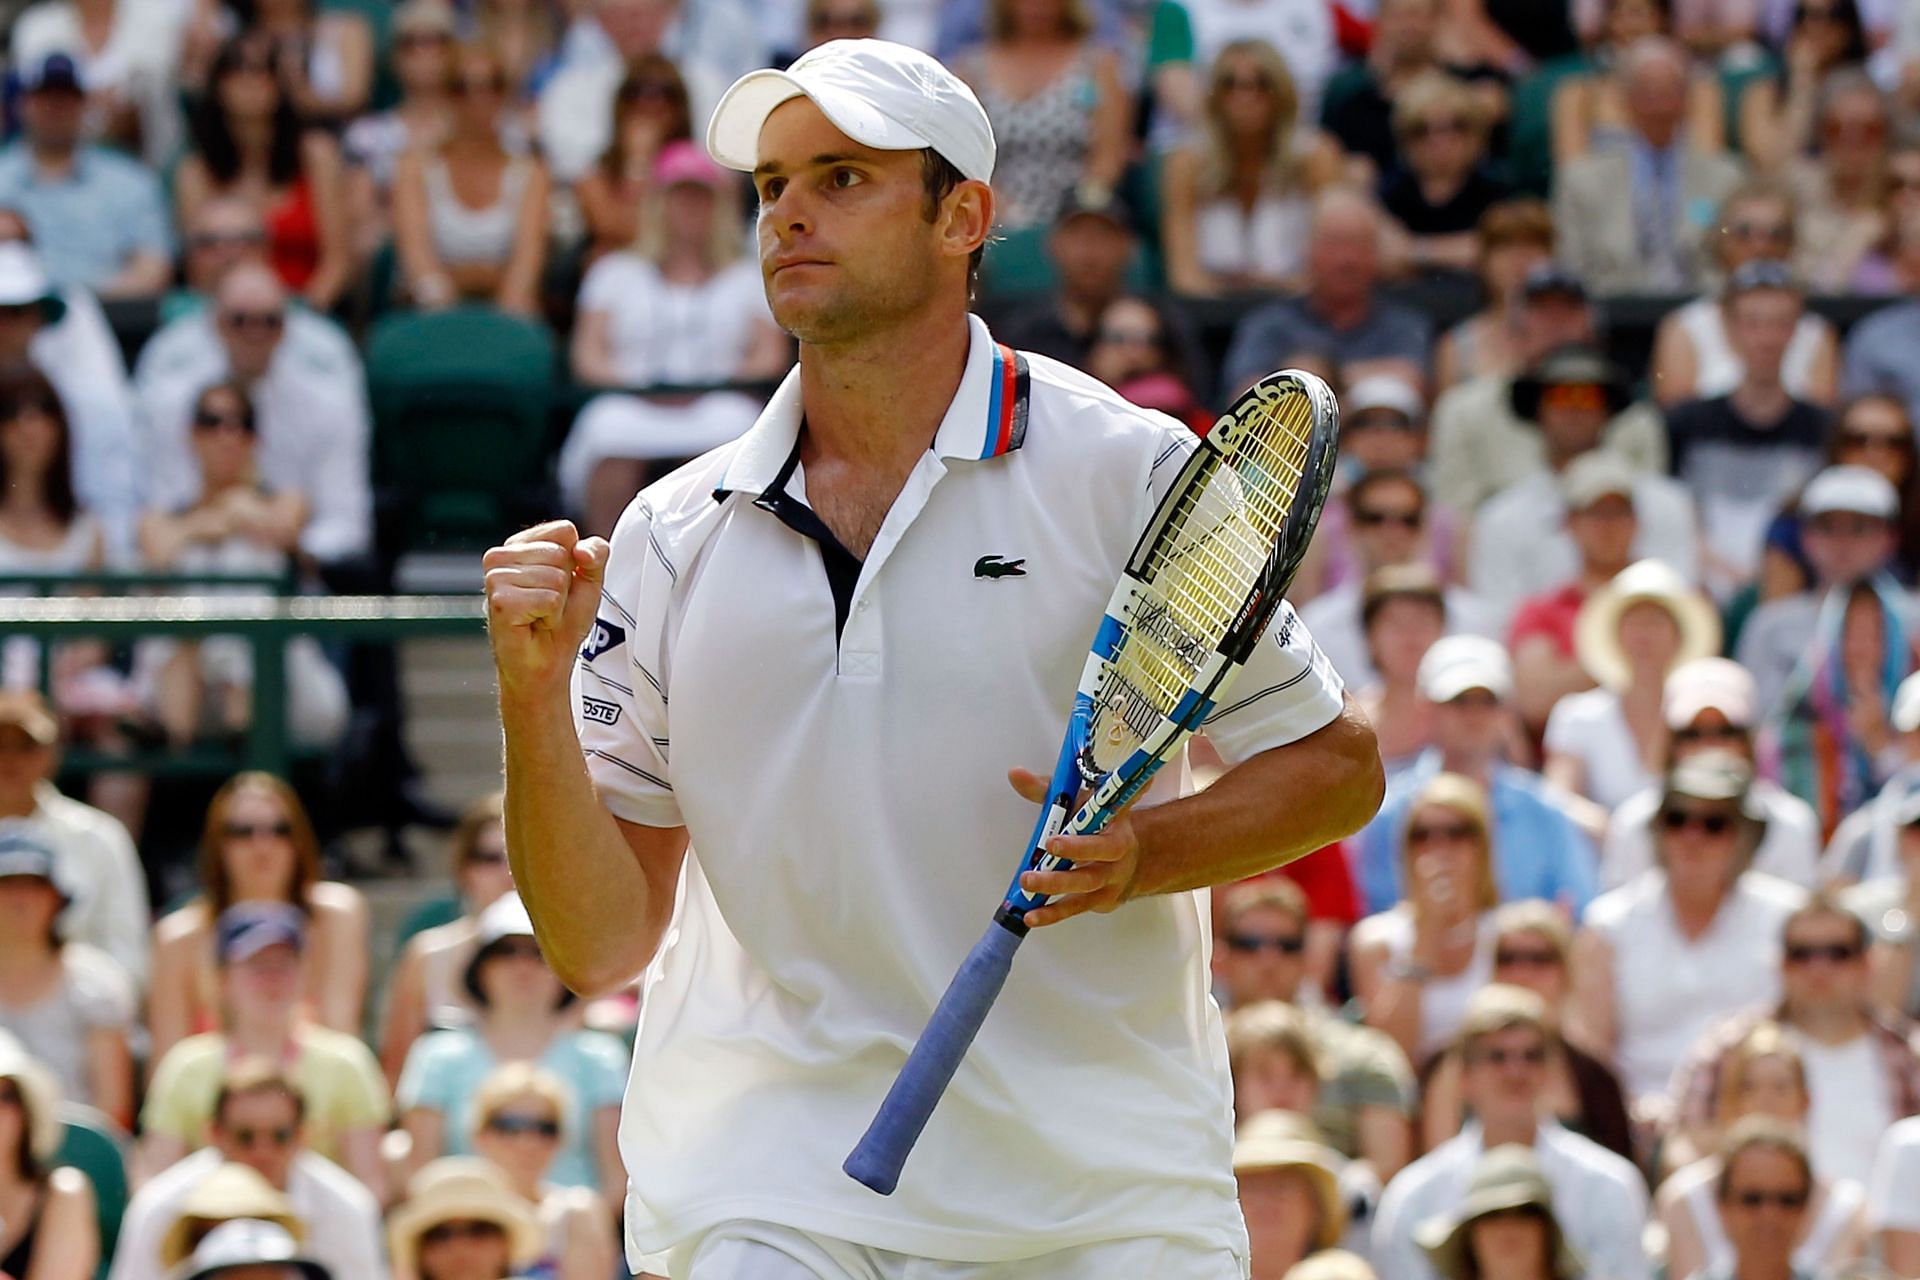 Despite losing the longest tie-break in Australian Open history, Andy Roddick won the match in four sets